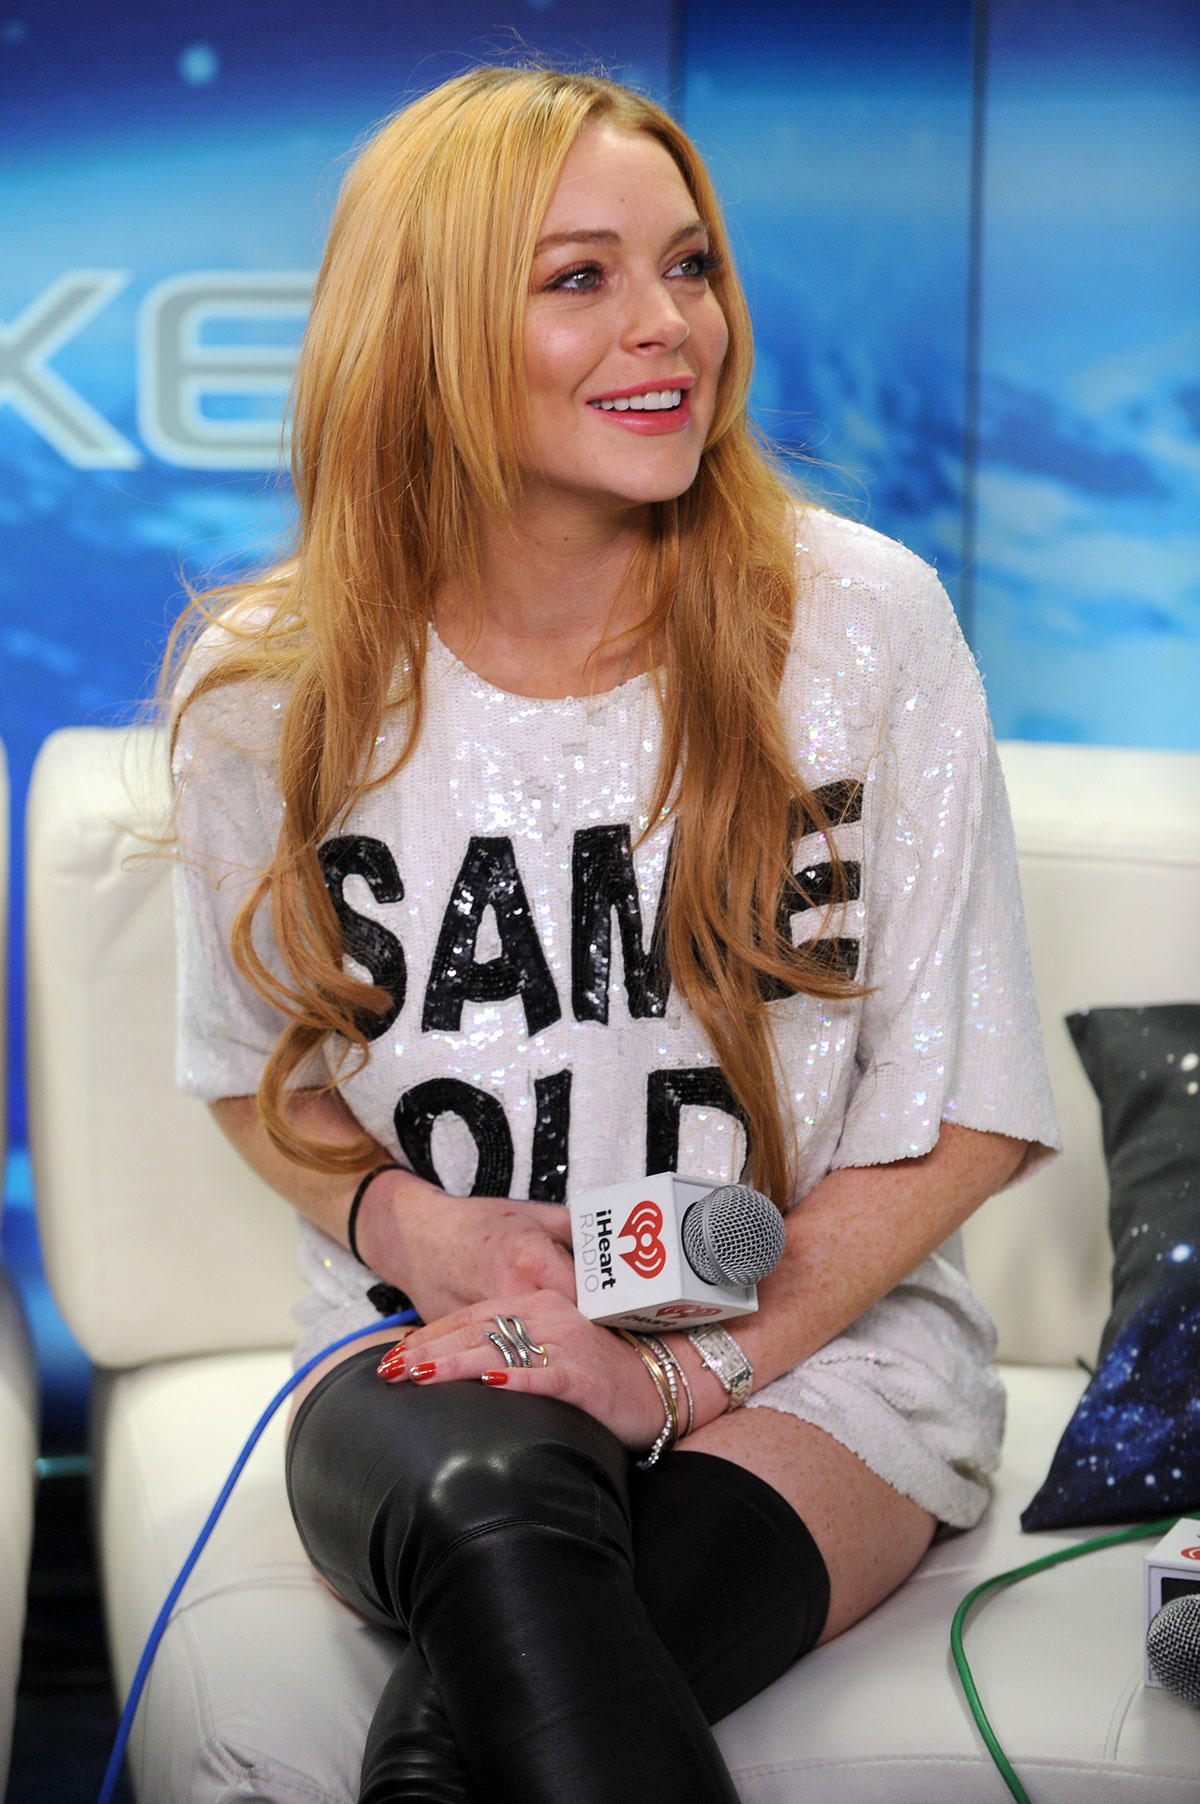 Lindsay Lohan attends Z100 Jingle Ball 2013